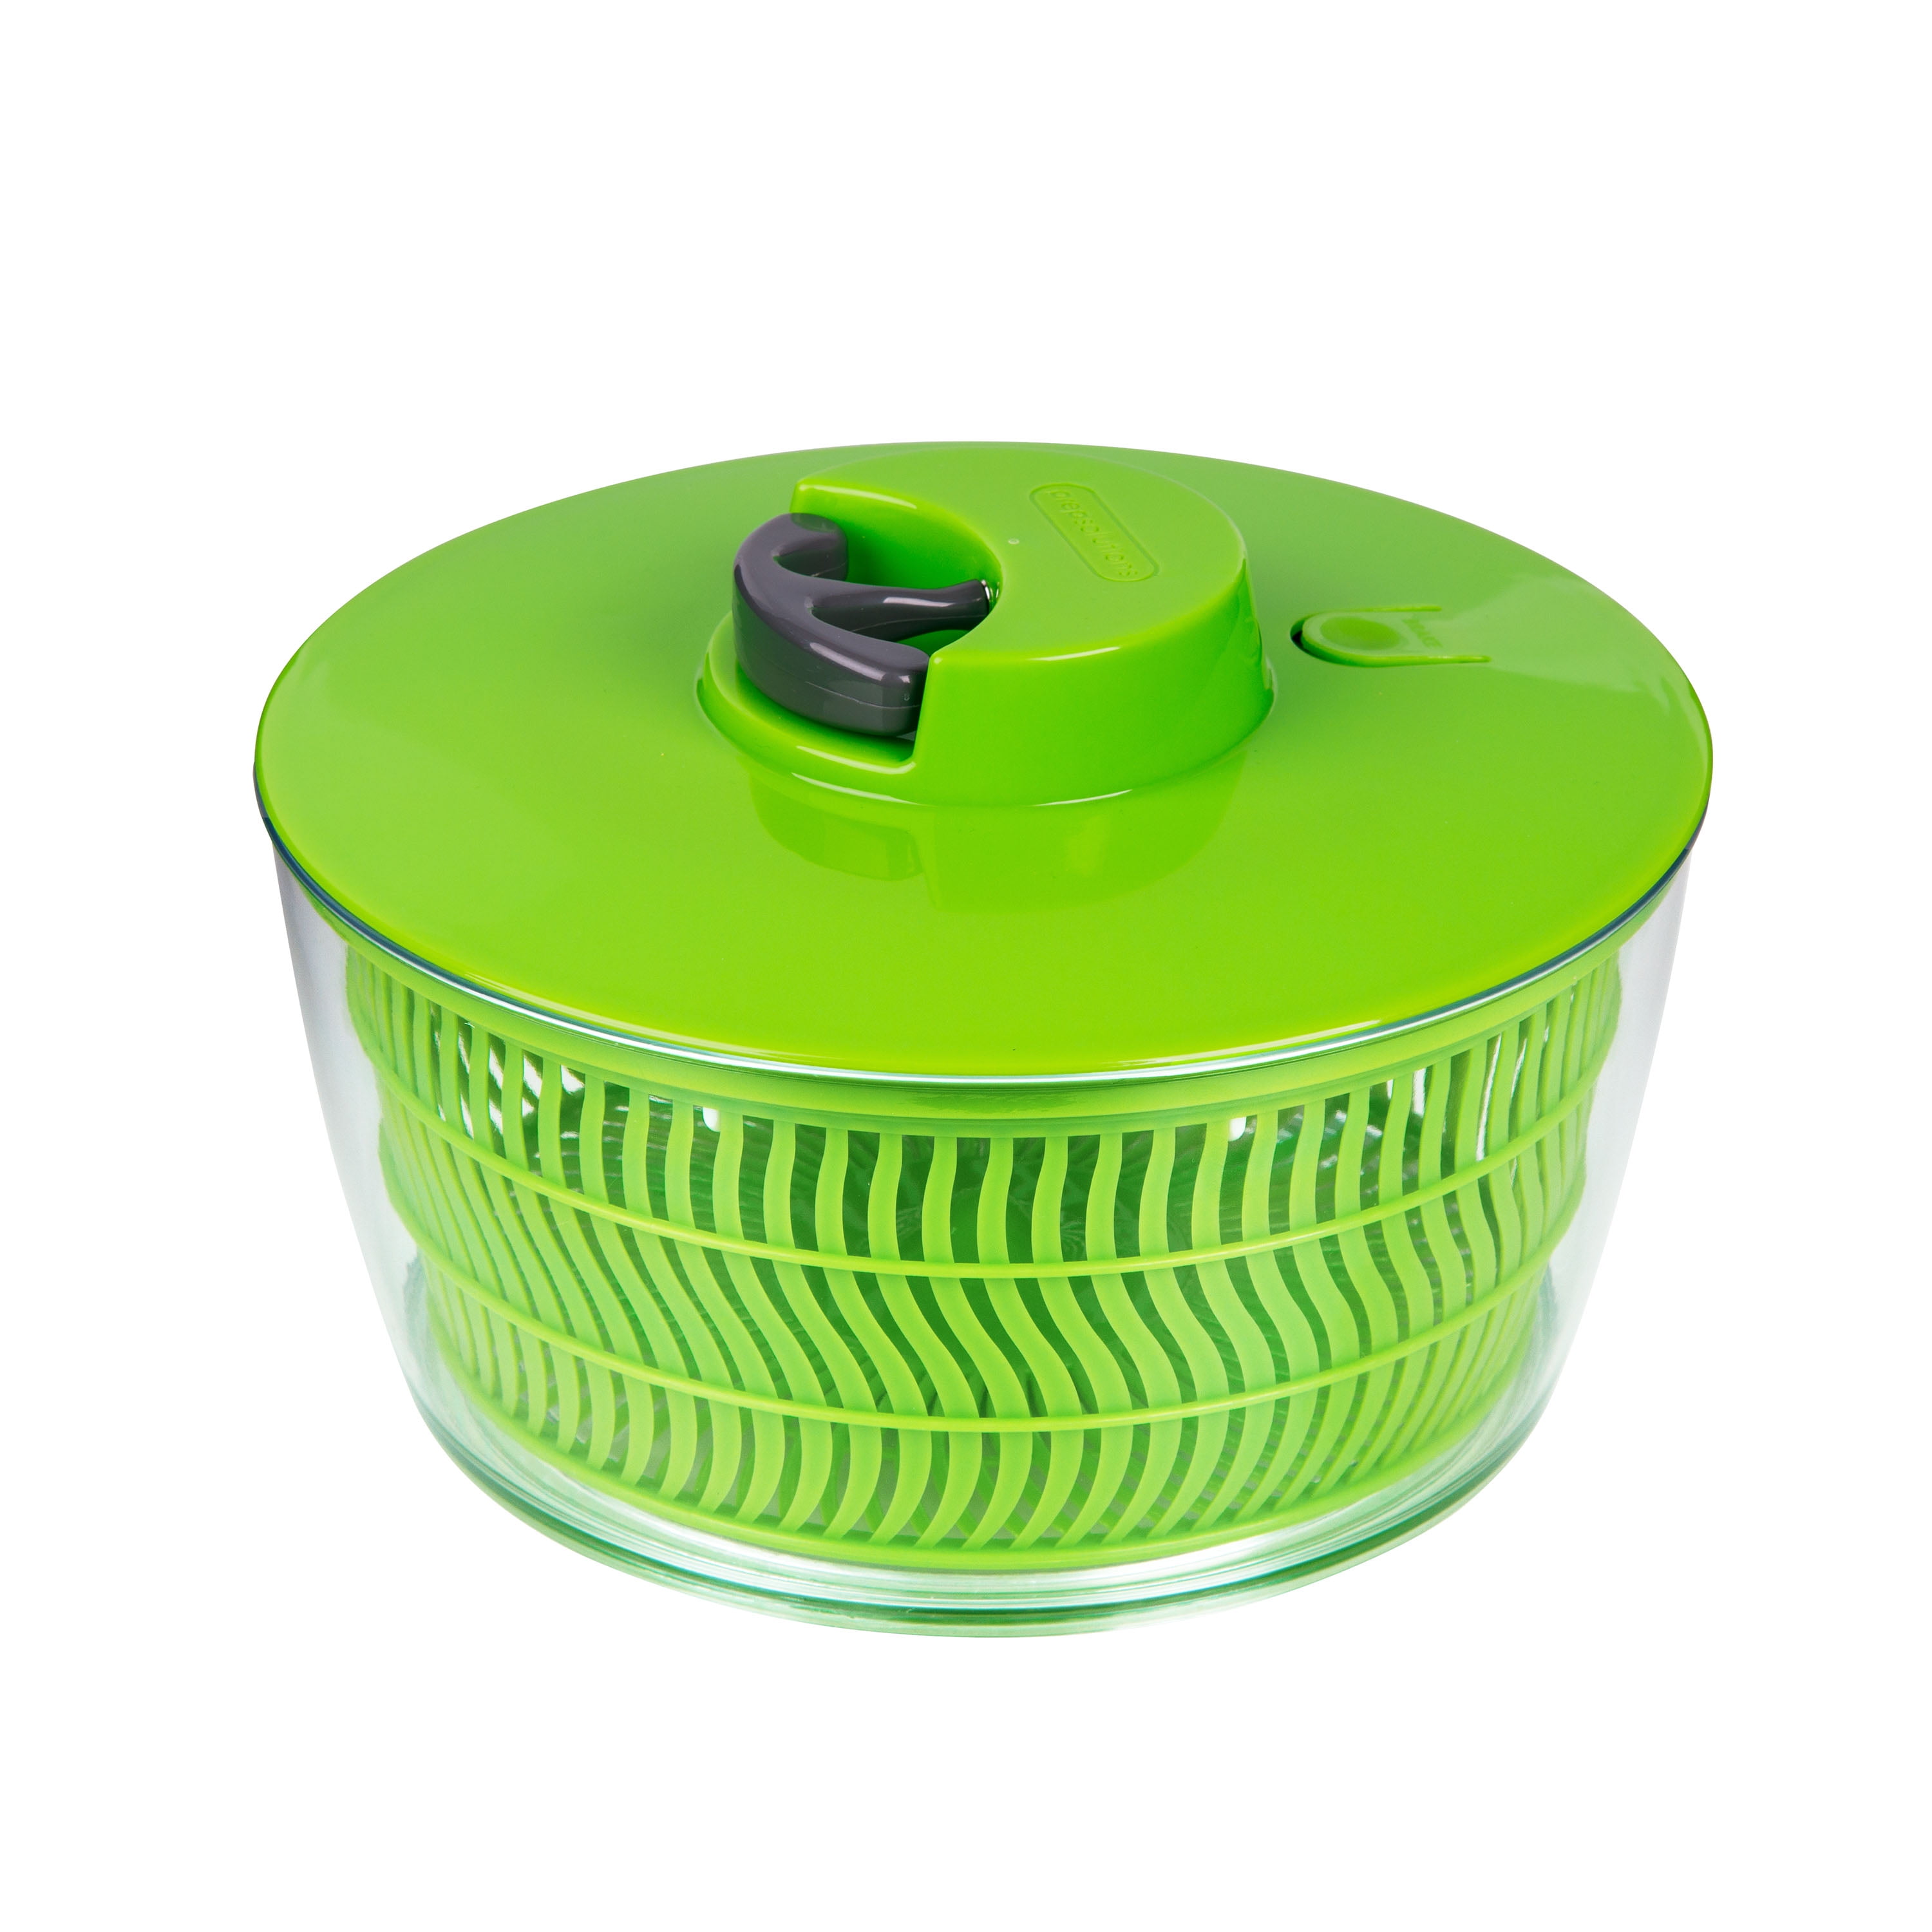 Progressive CSS-2 Green External Bowl Collapsible Salad Spinner 3